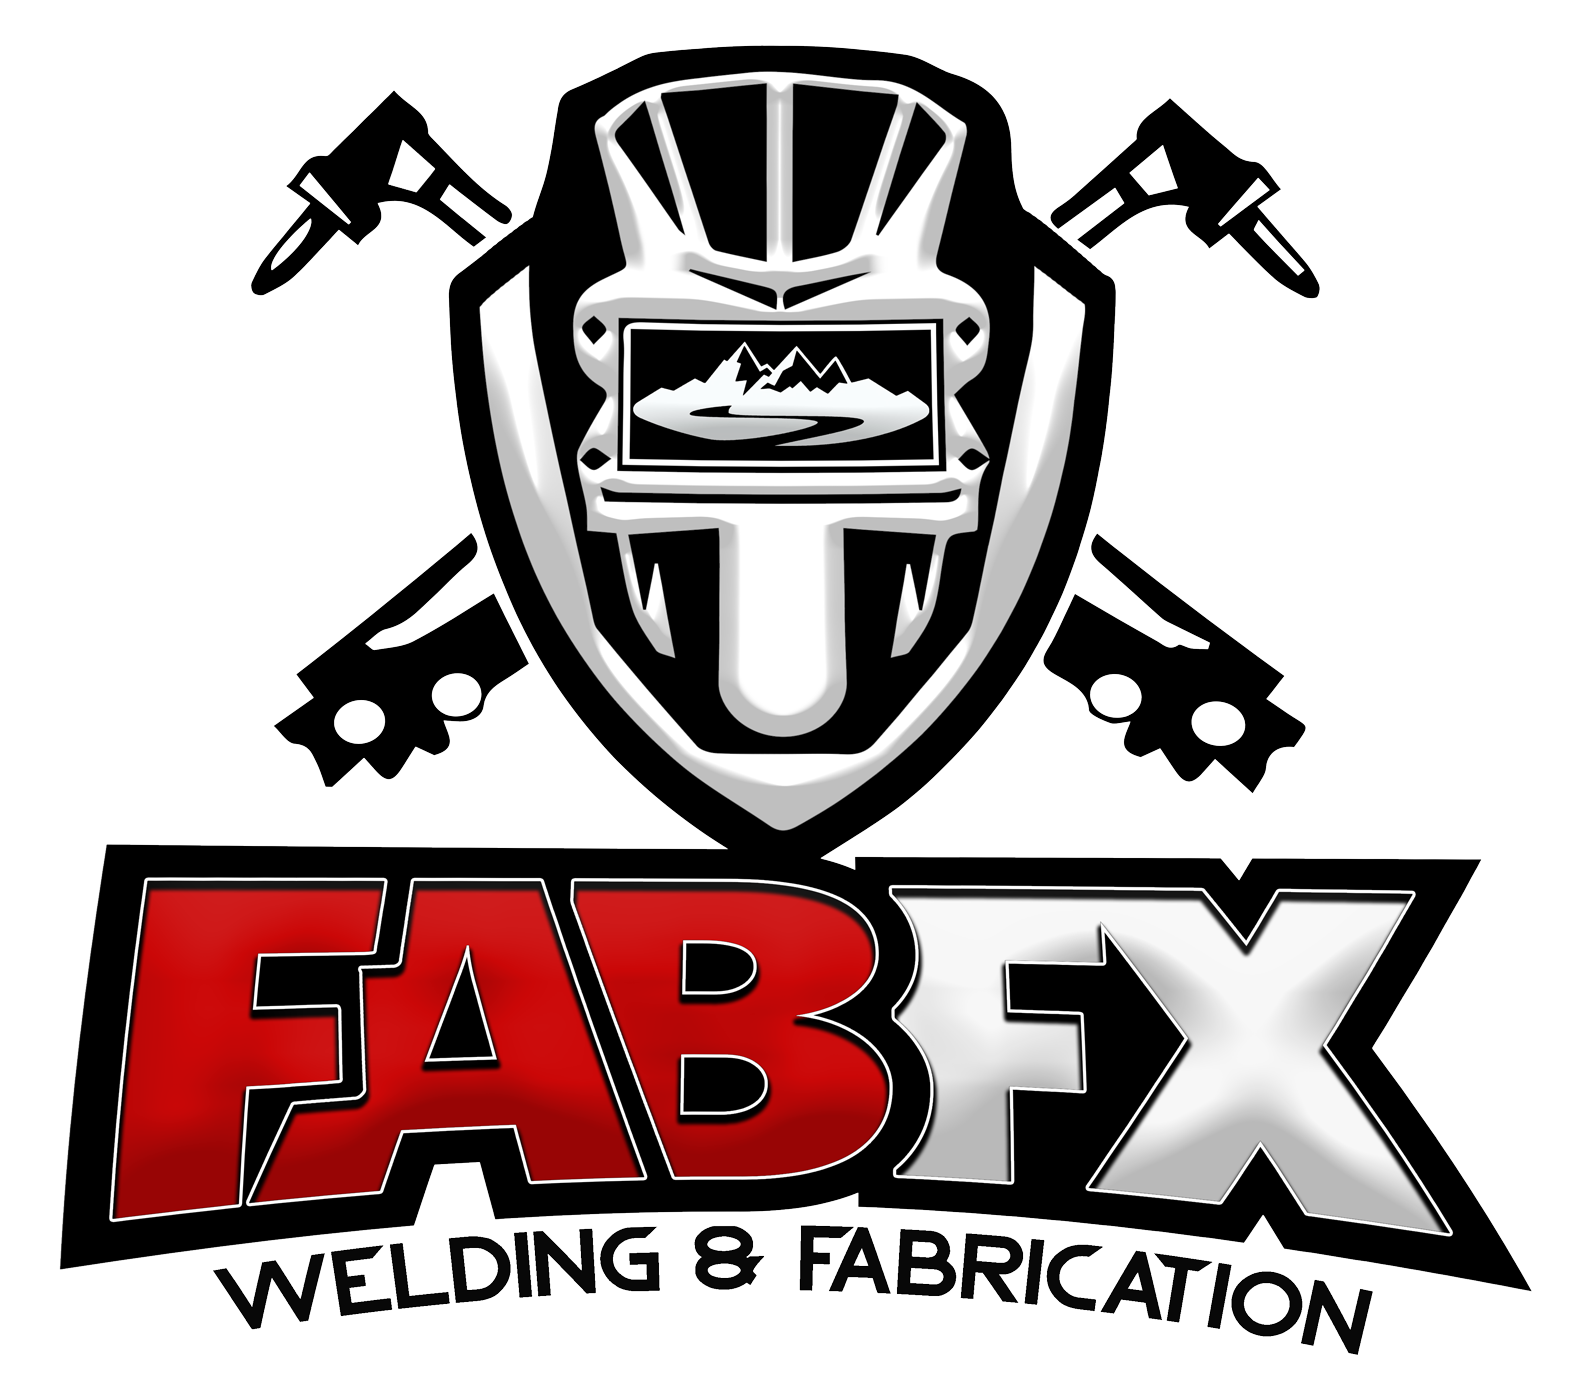 Welding & Fabrication